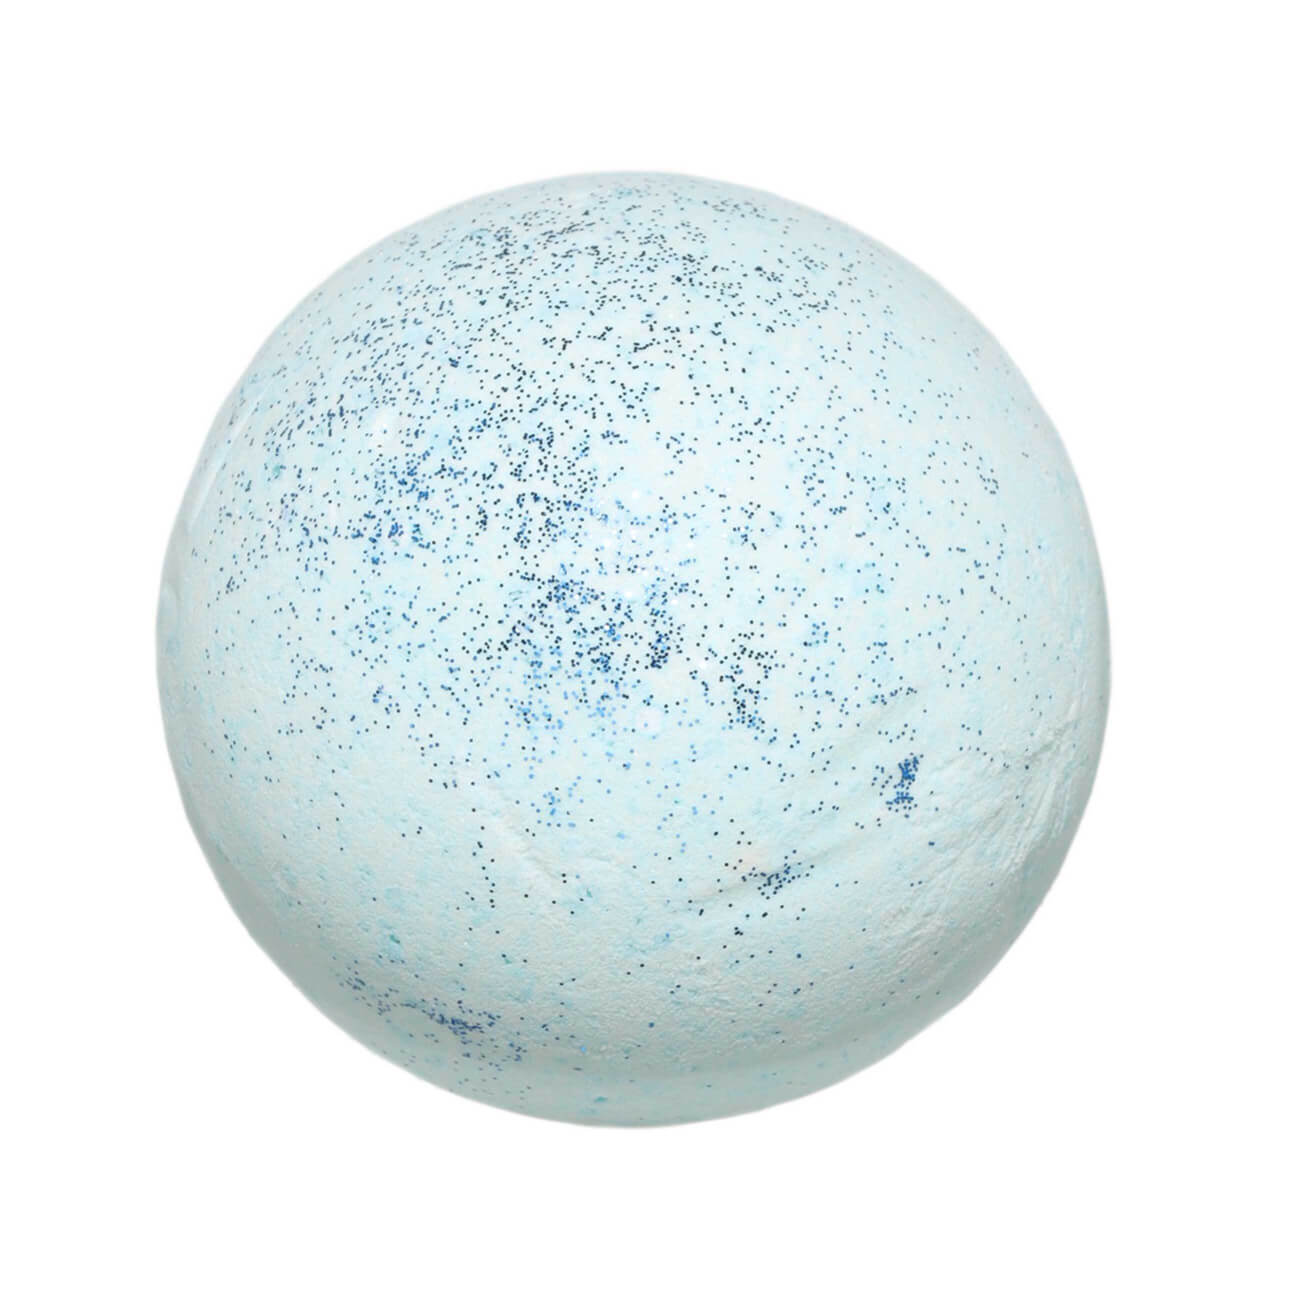 Бомбочка для ванны, 130 гр, с блестками, Ягодный аромат, голубая, Шар, Sparkle body бомбочка для ванны 130 гр с блестками ягодный аромат голубая шар sparkle body